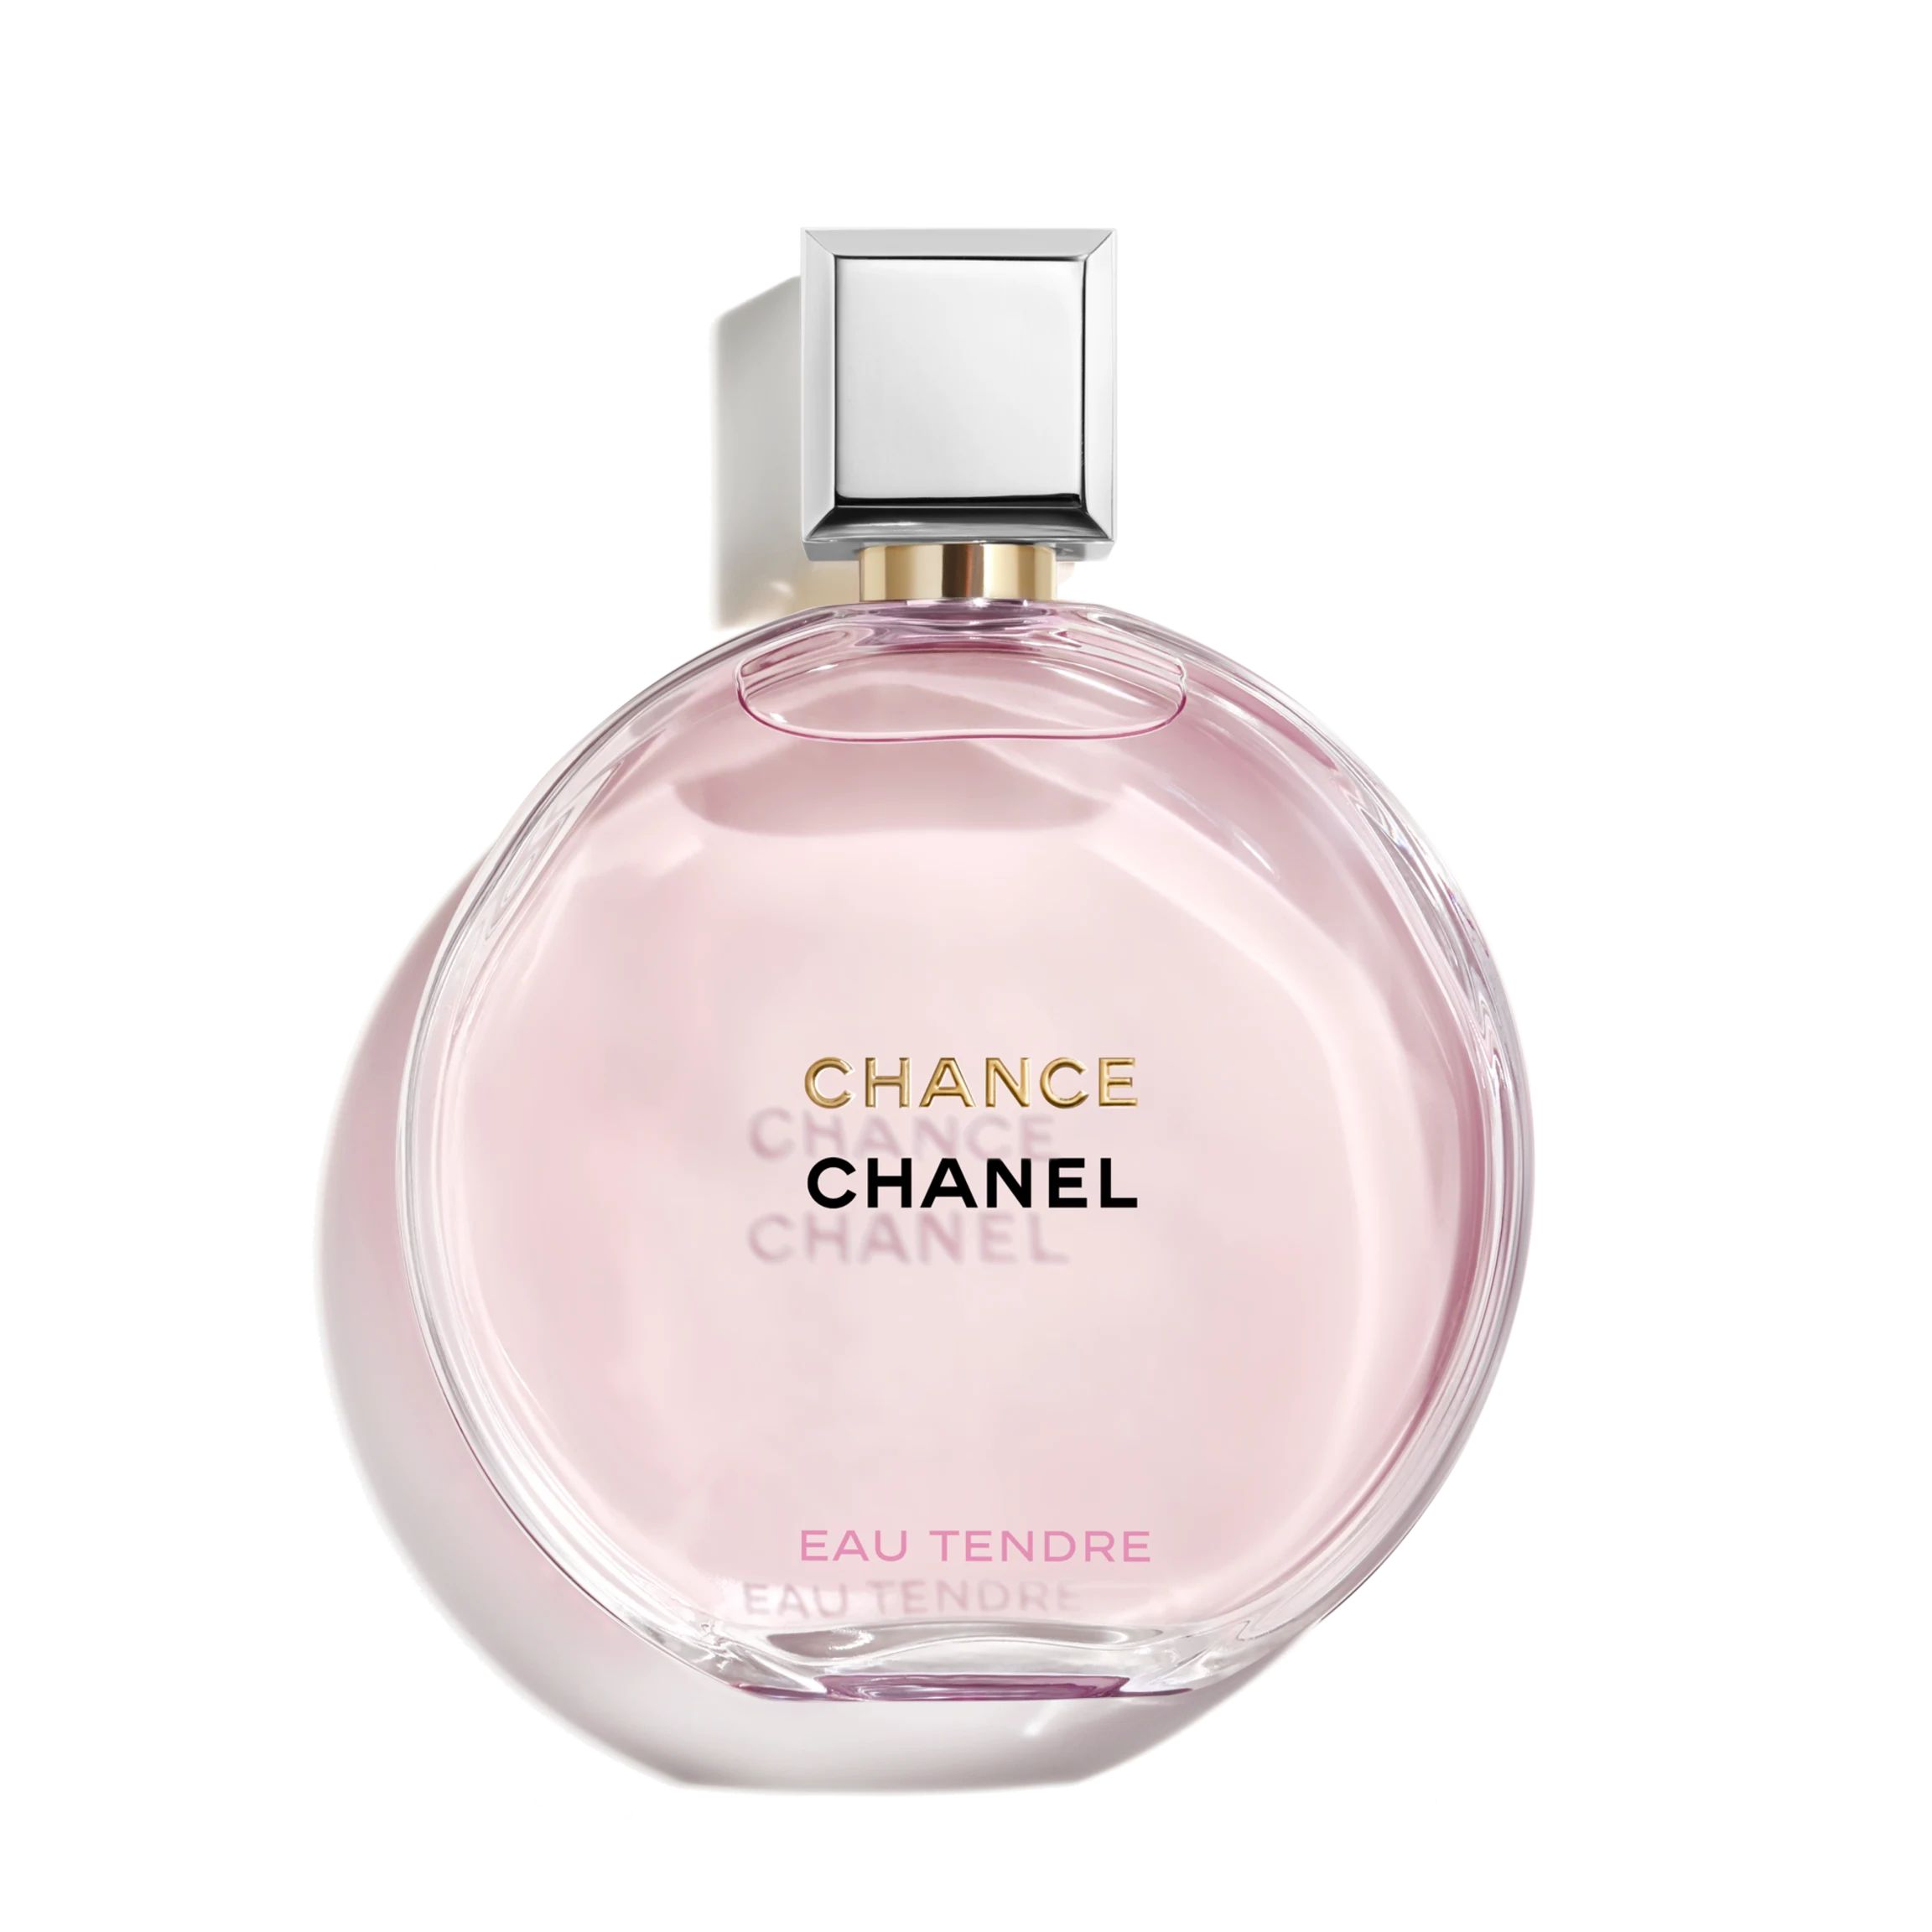 CHANCE EAU TENDRE | Chanel, Inc. (US)